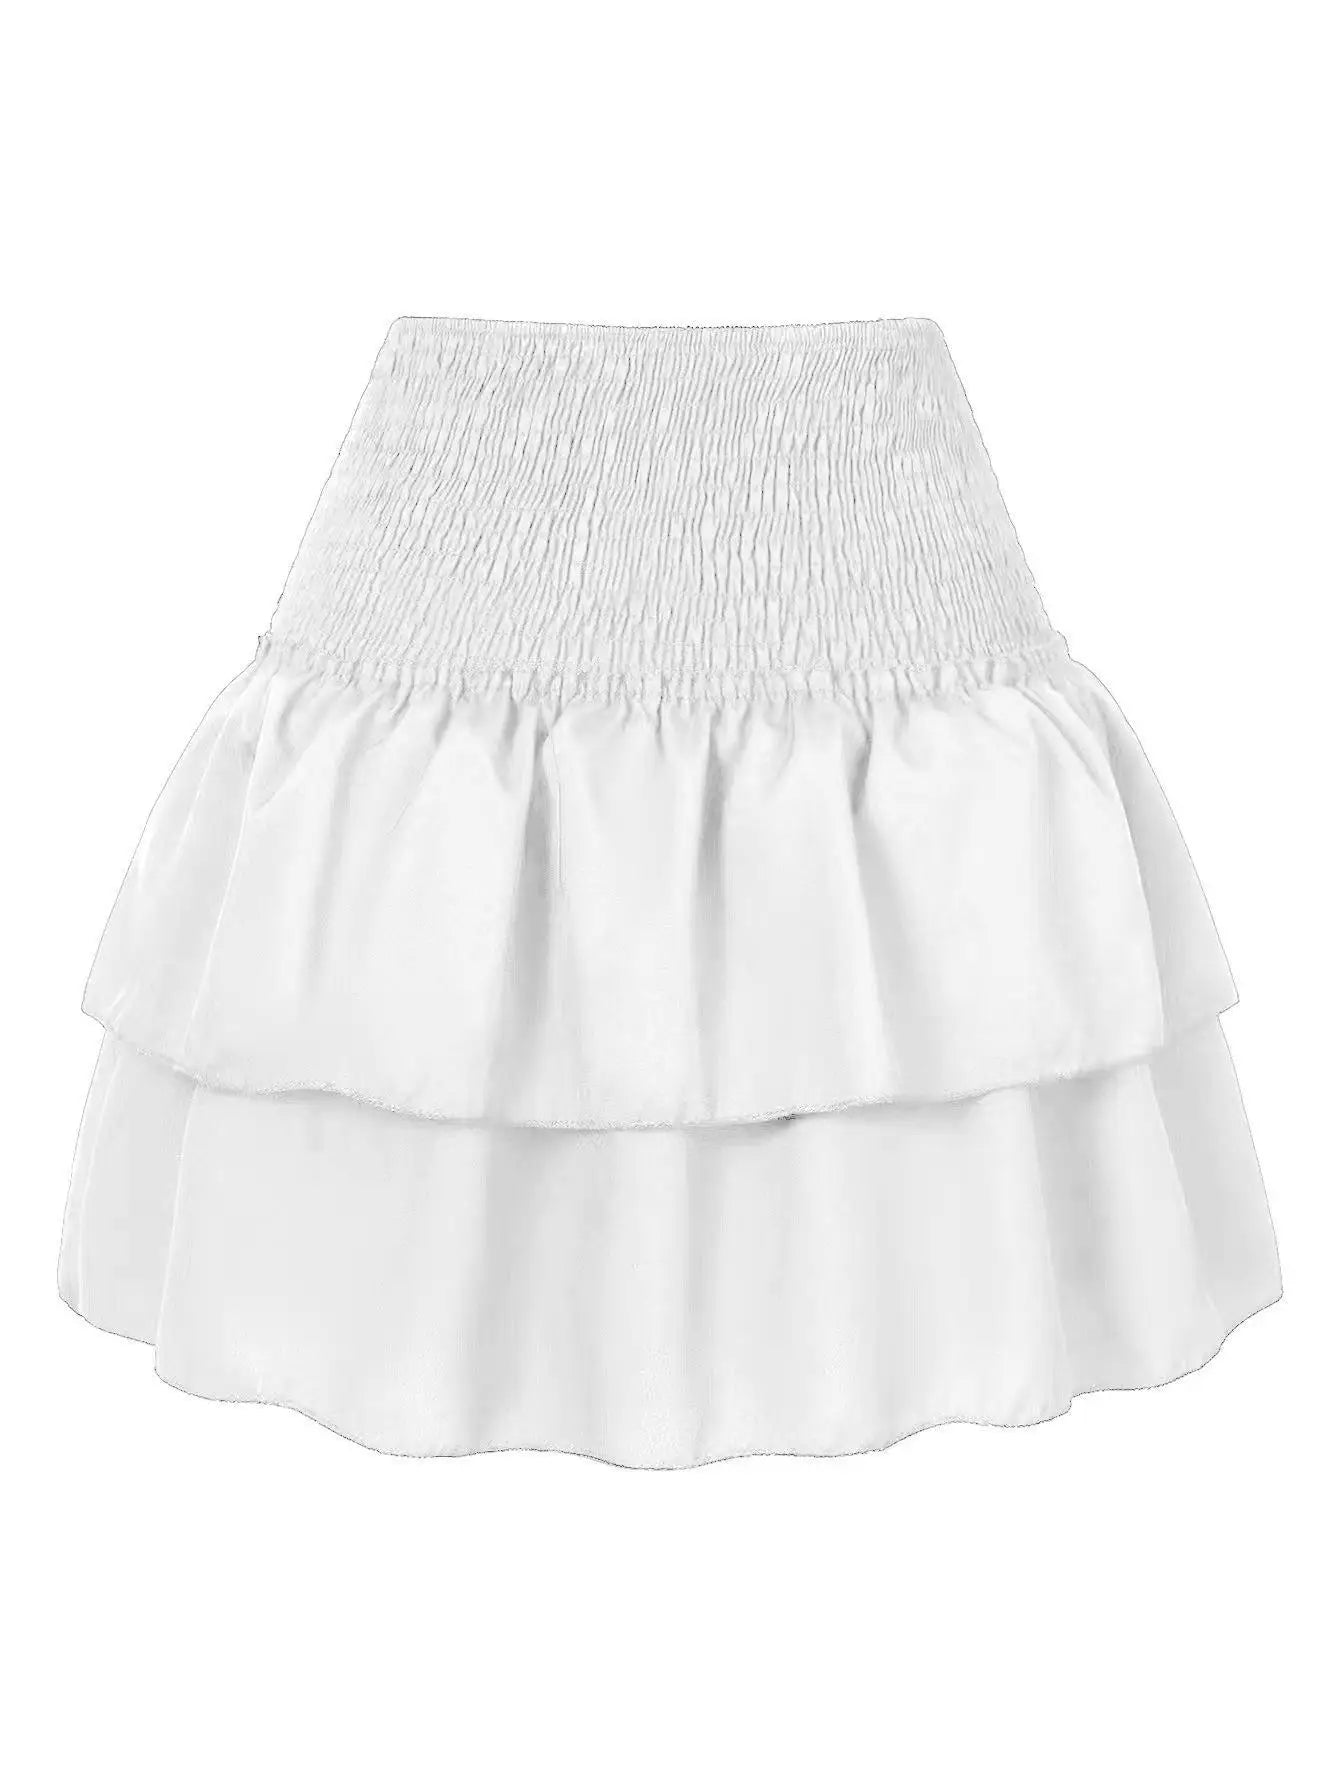 Mini Skirts- Express Your Style in Vibrant Layered Mini Skirt- White- Pekosa Women Fashion